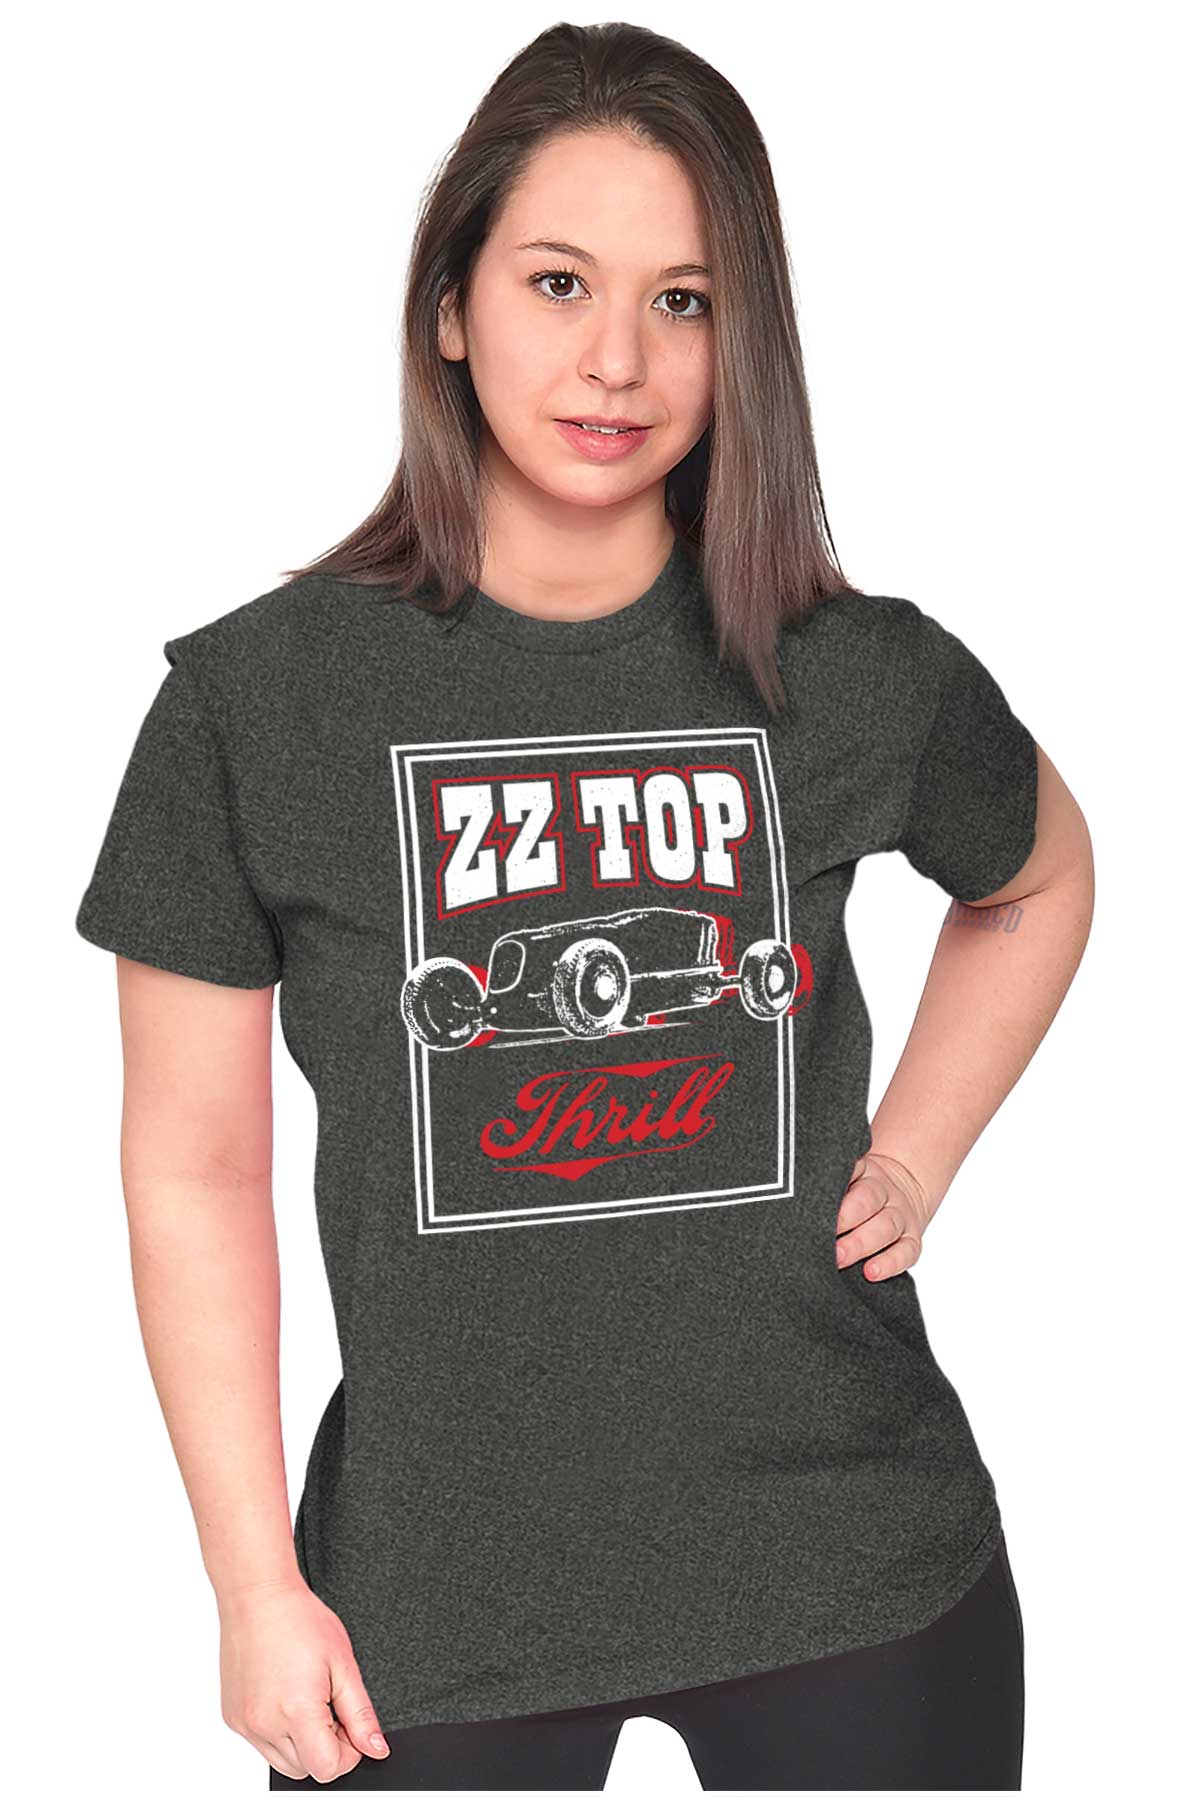 ZZ Top Thrill Official Concert 80s Women's T Shirt Ladies Tee Brisco Brands L - image 3 of 4